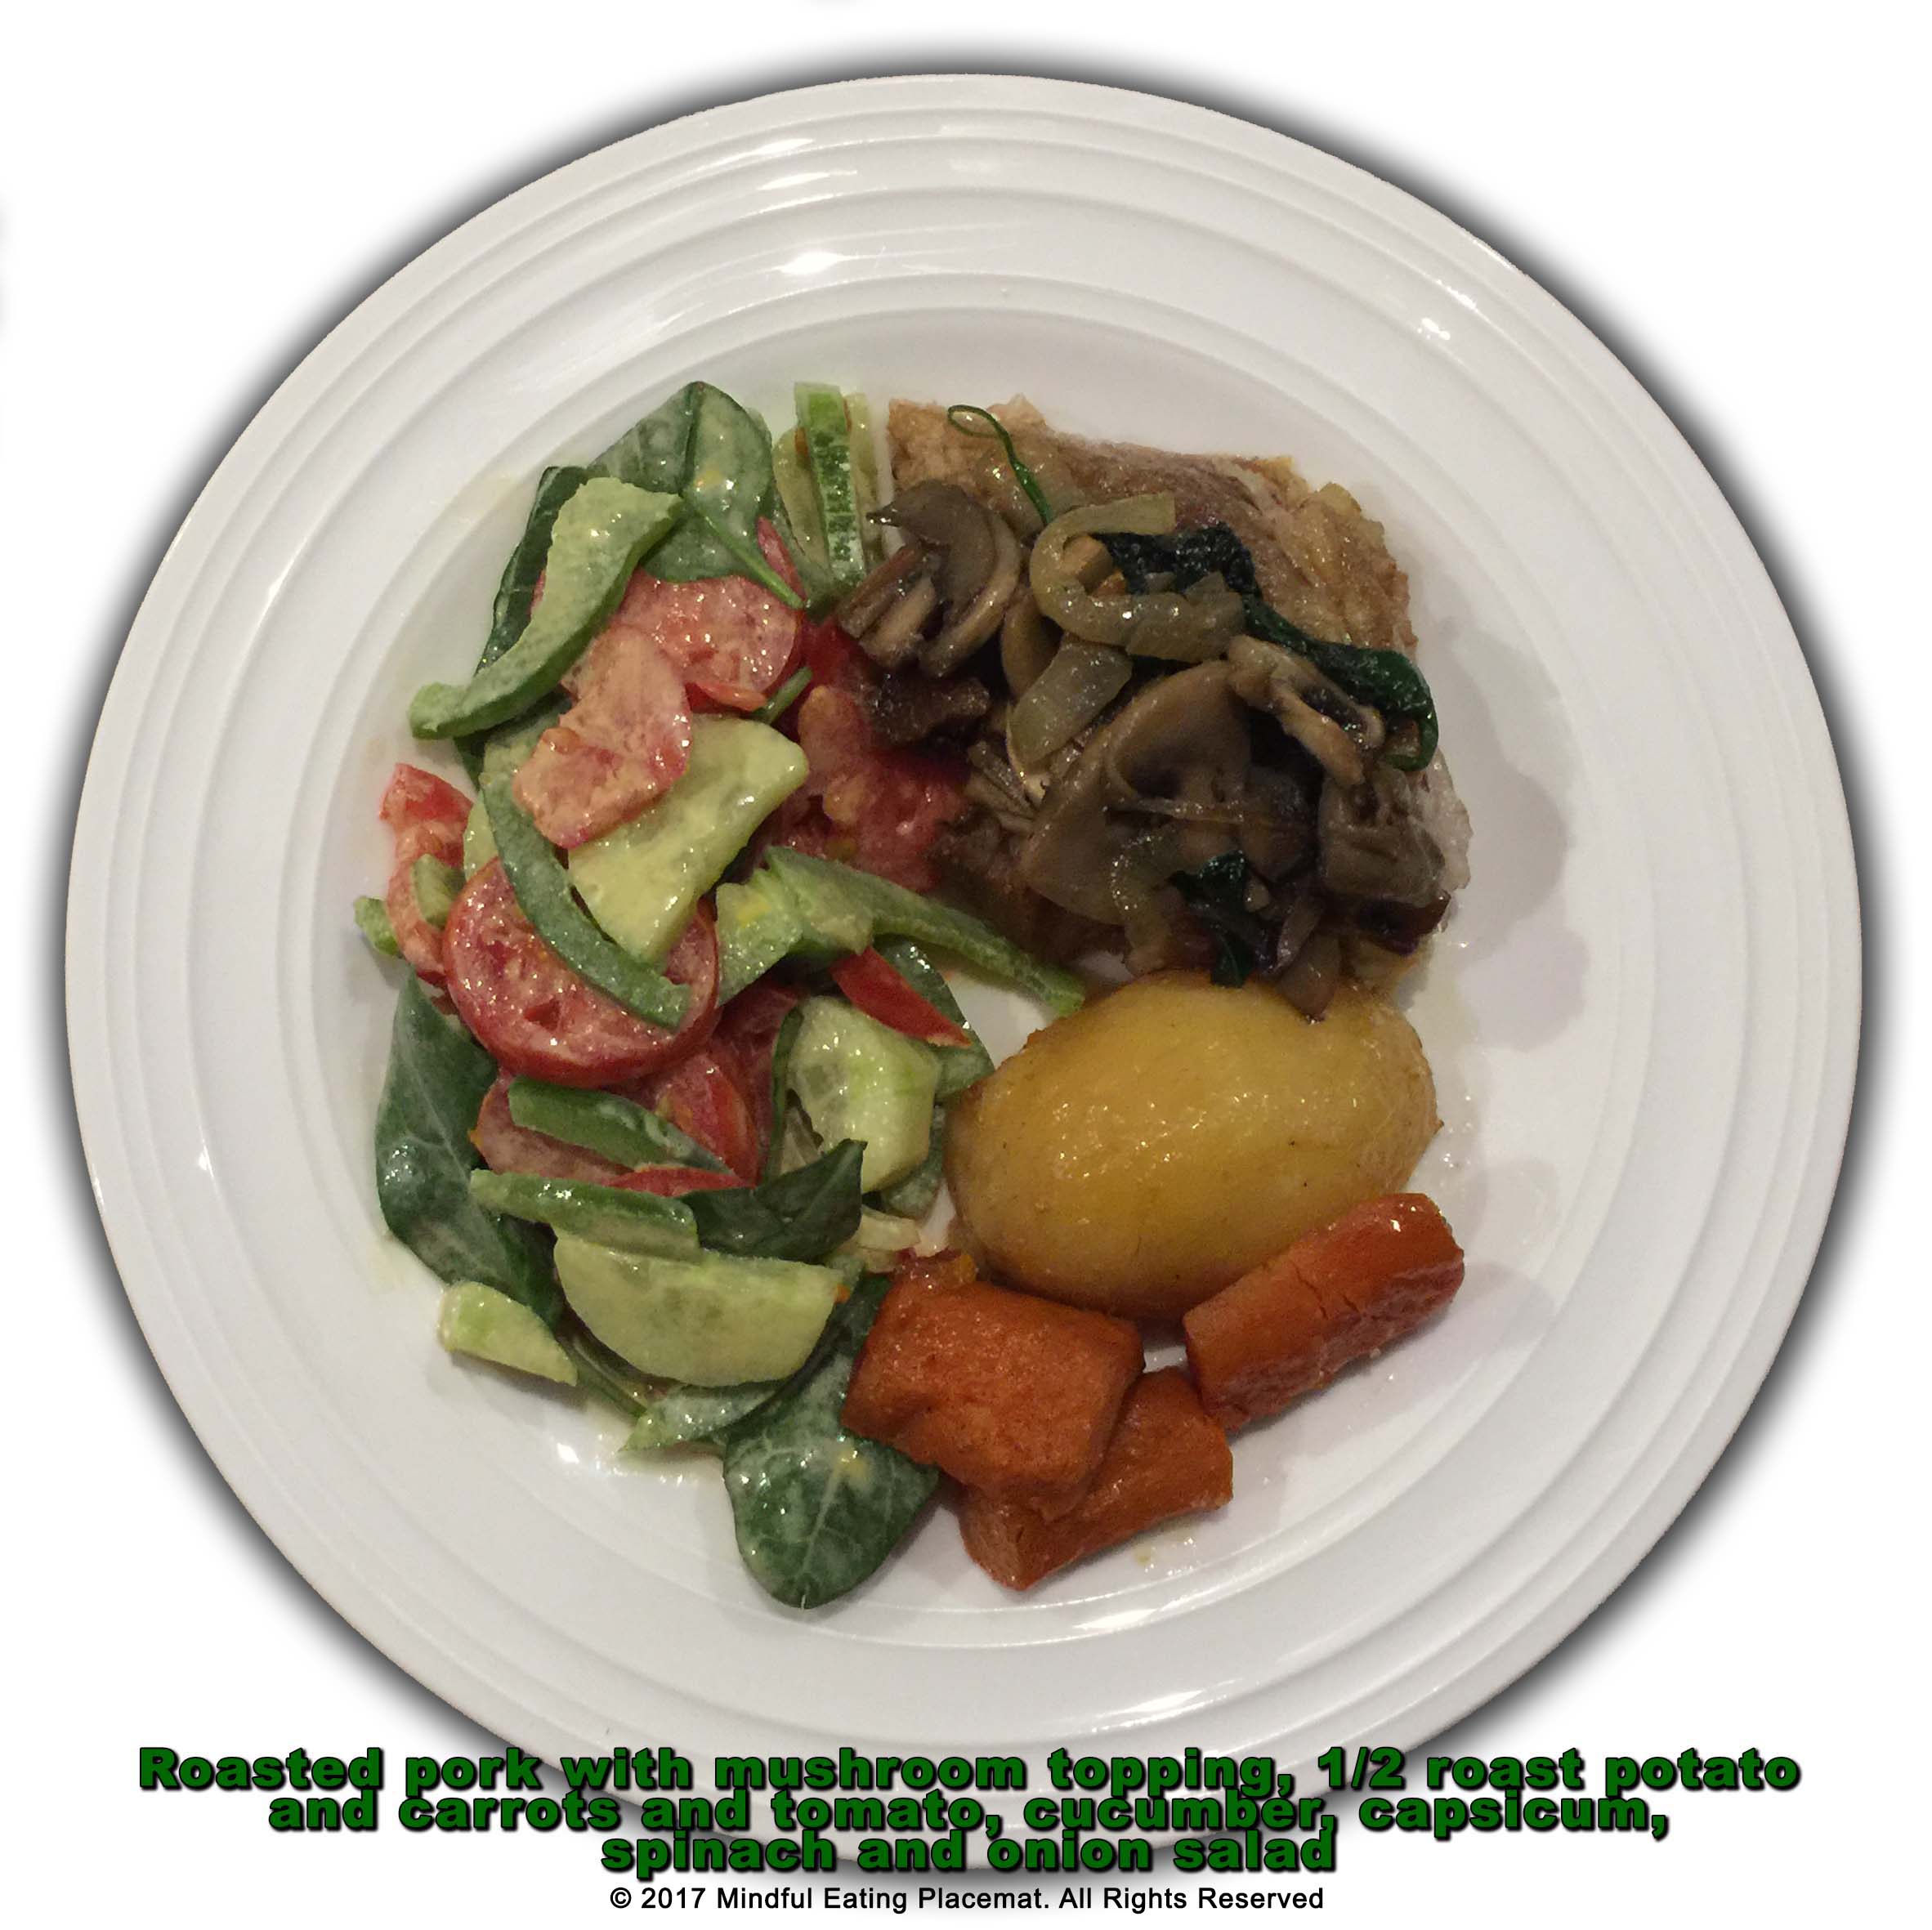 Pork with mushrooms, roasted vegetables and salad